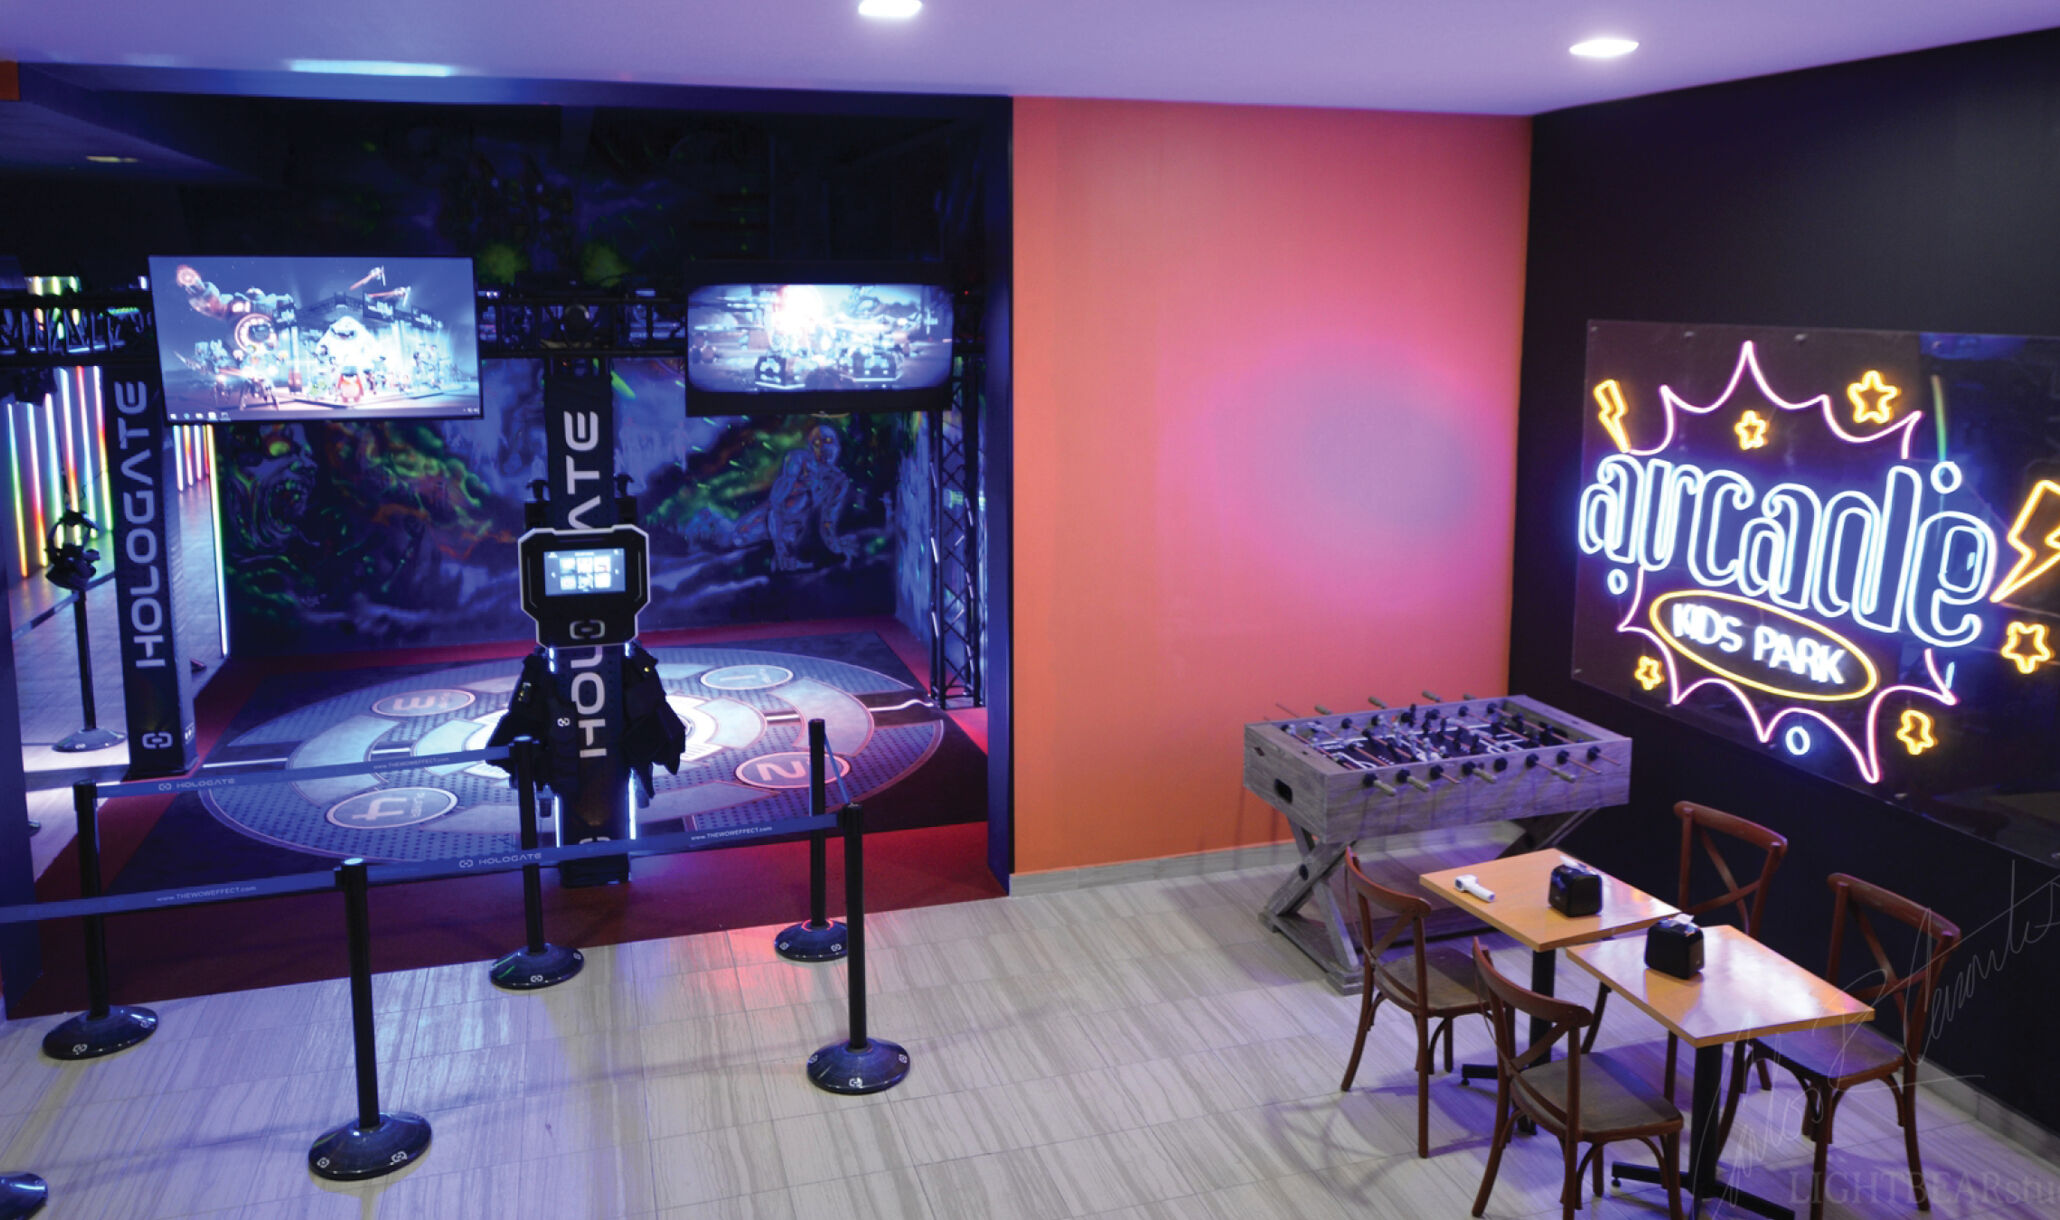 Mercury Bowling Center, Oxaca Mexico - VR & Arcade-3